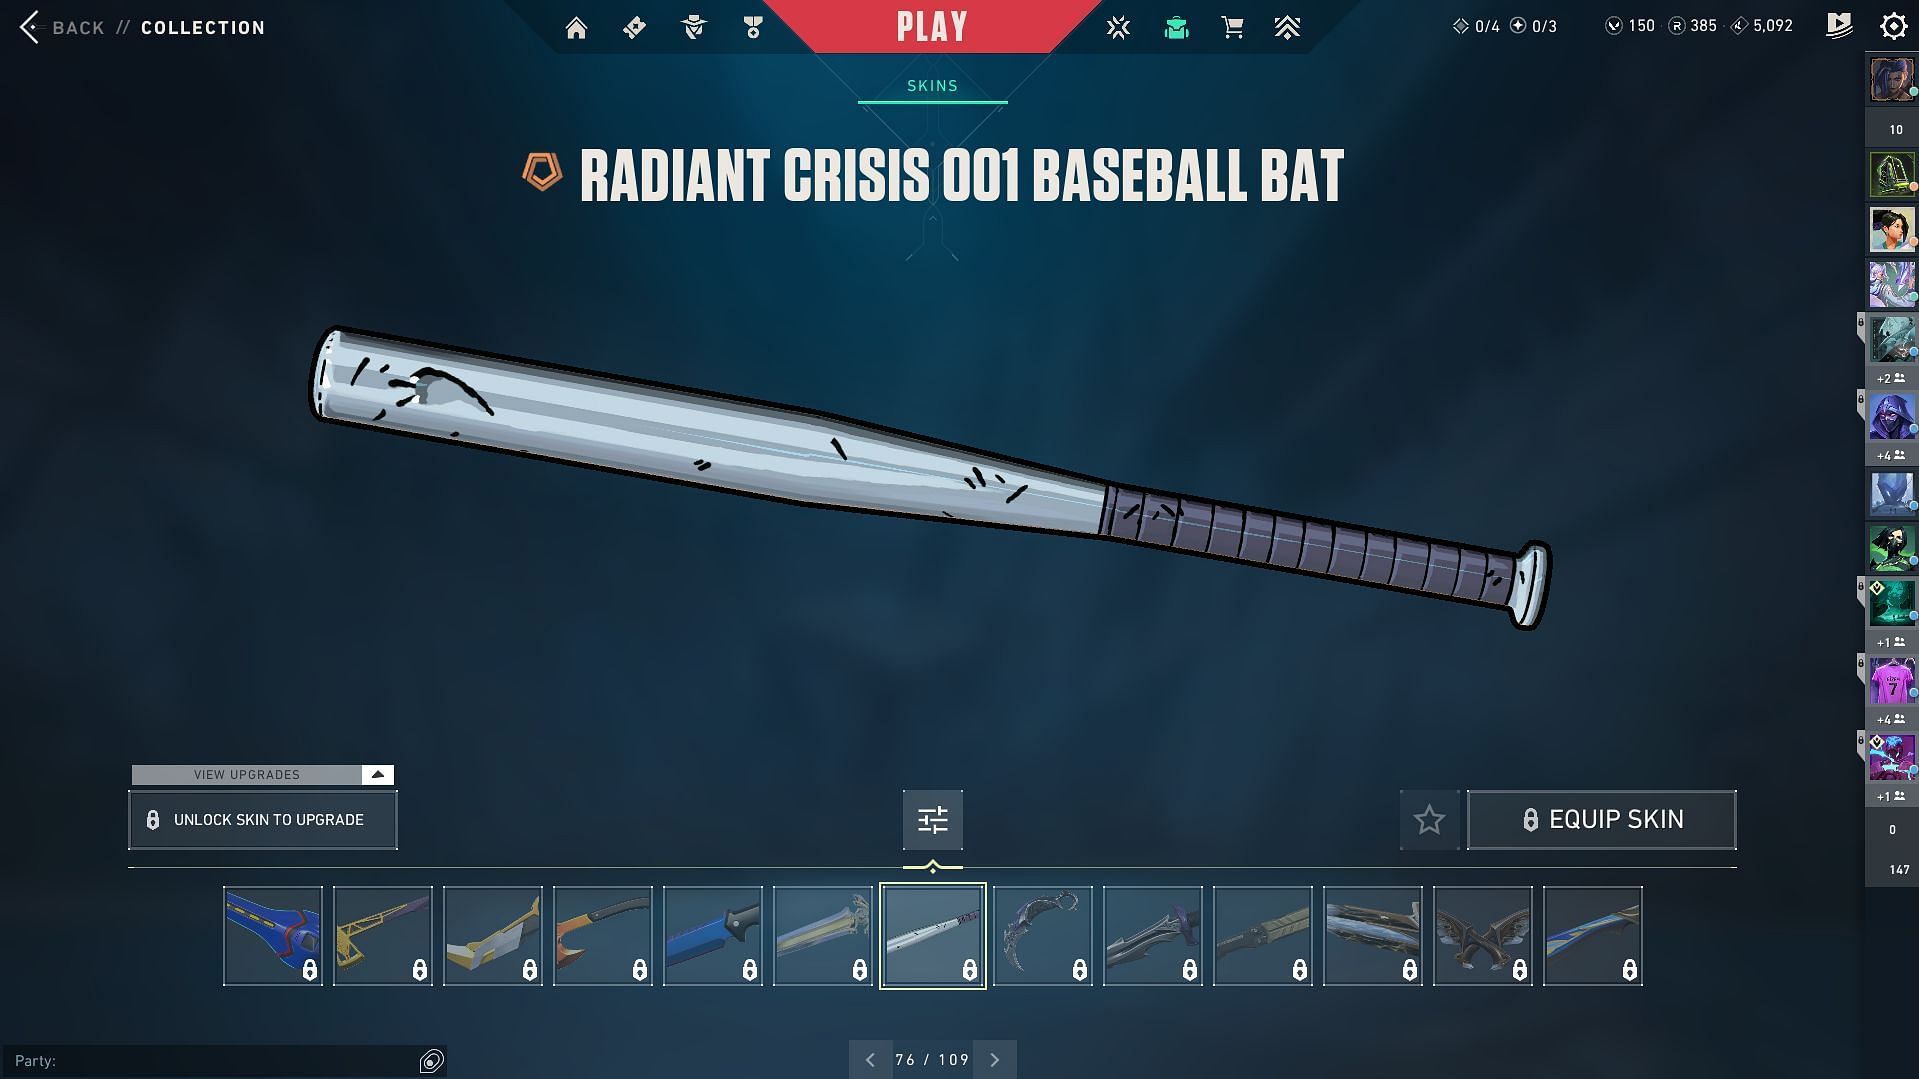 Radiant Crisis 001 Baseball Bat in-game view (Image via Riot Games)